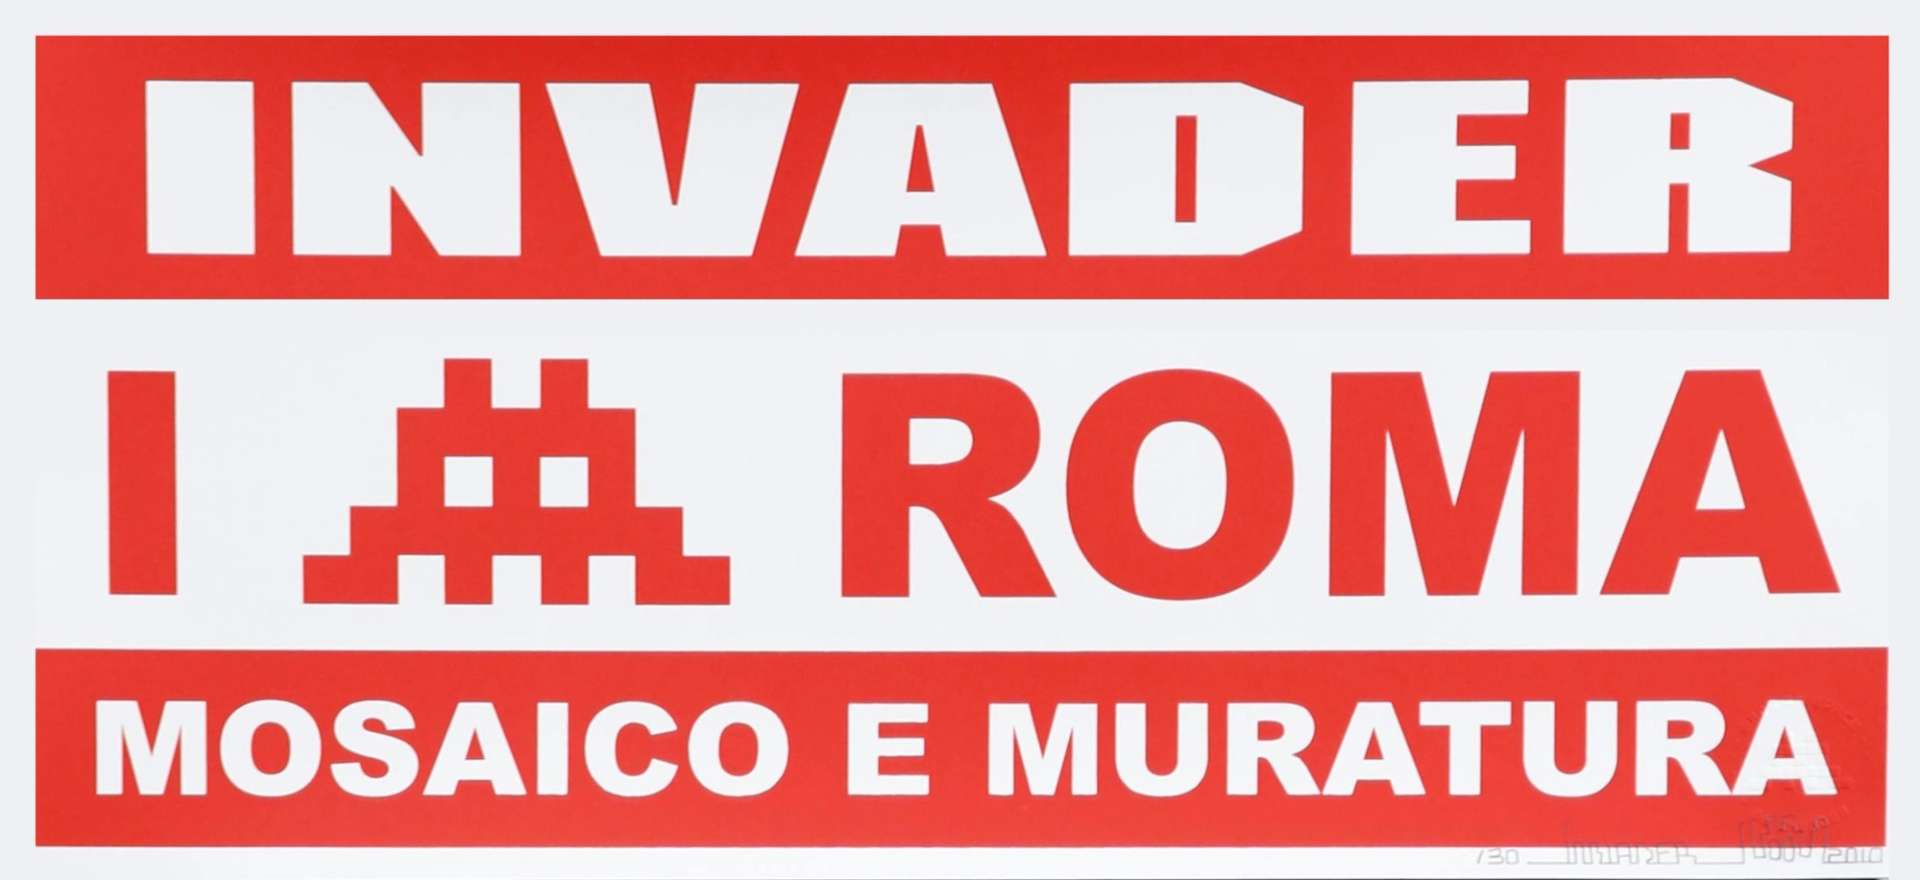 Invader: Mosaico E Muratura Roma (red) - Signed Print